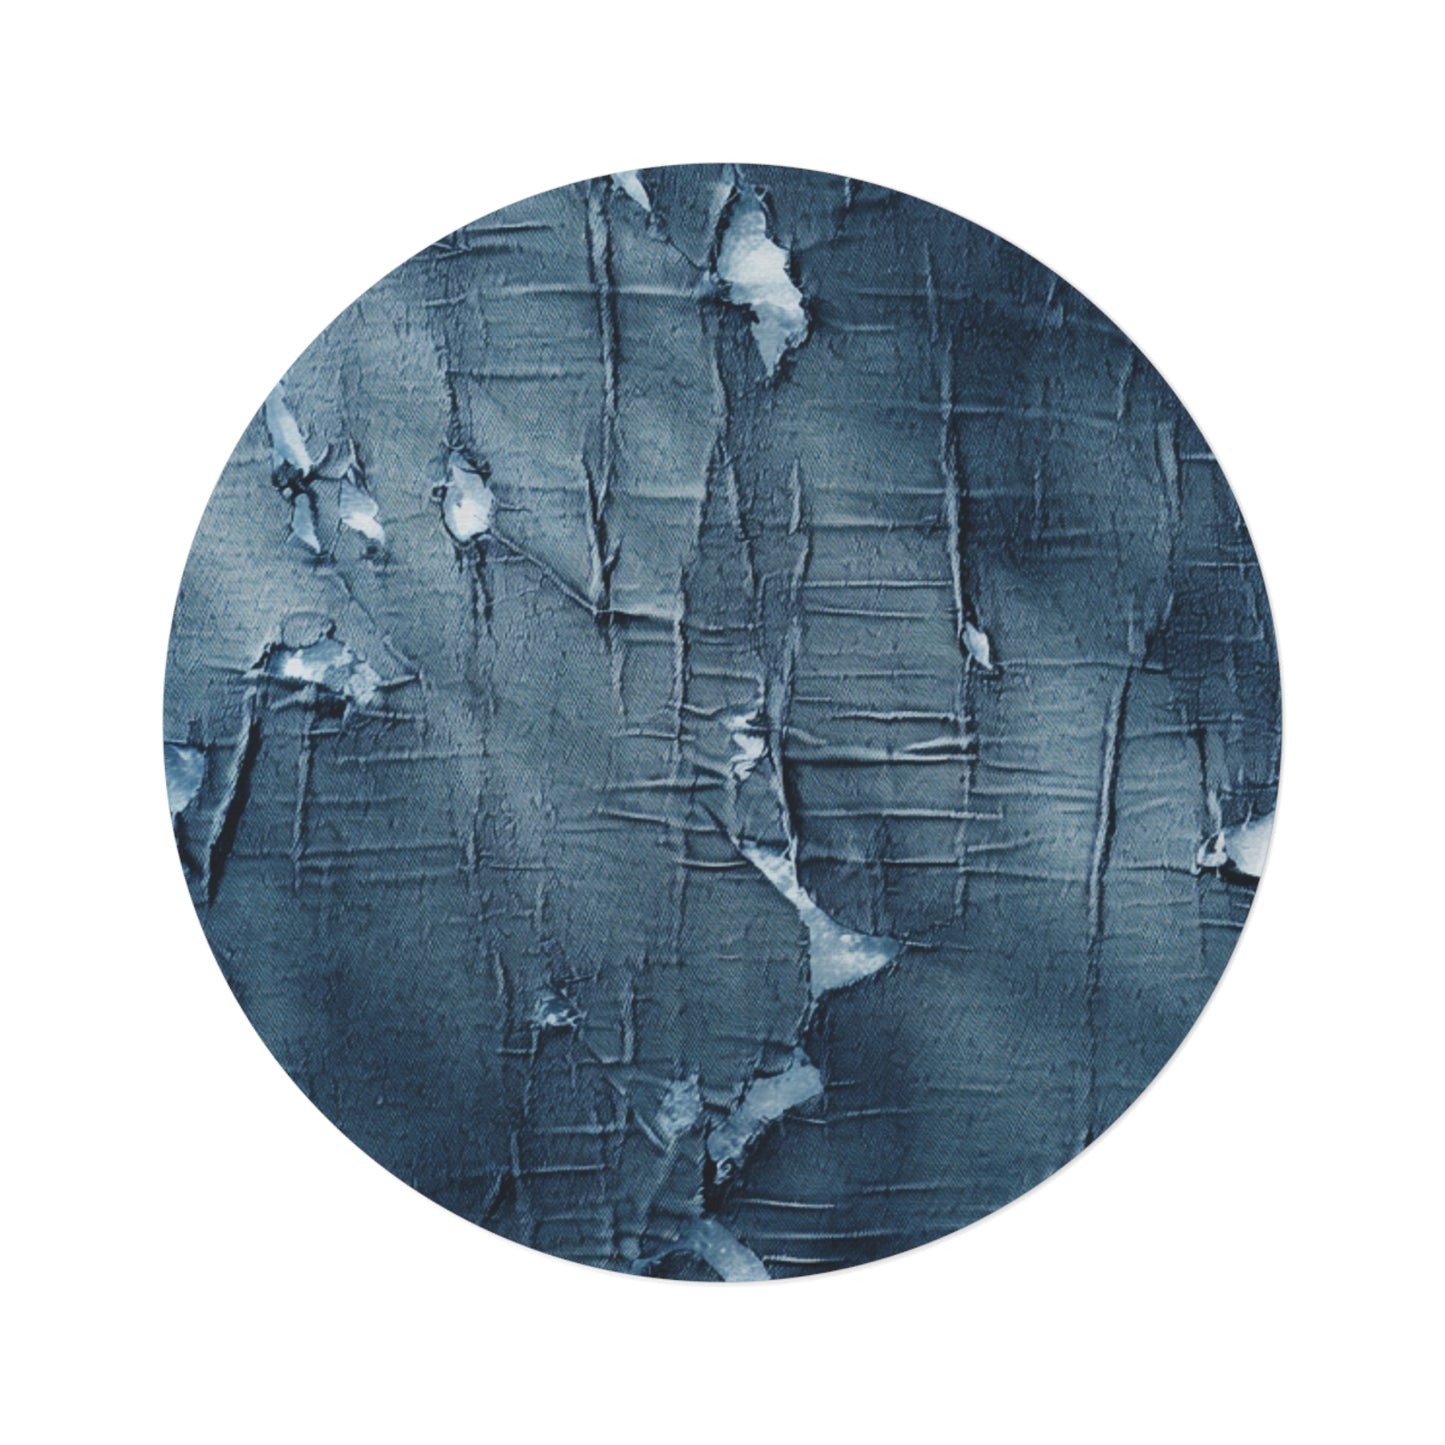 Distressed Blue Denim-Look: Edgy, Torn Fabric Design - Round Rug